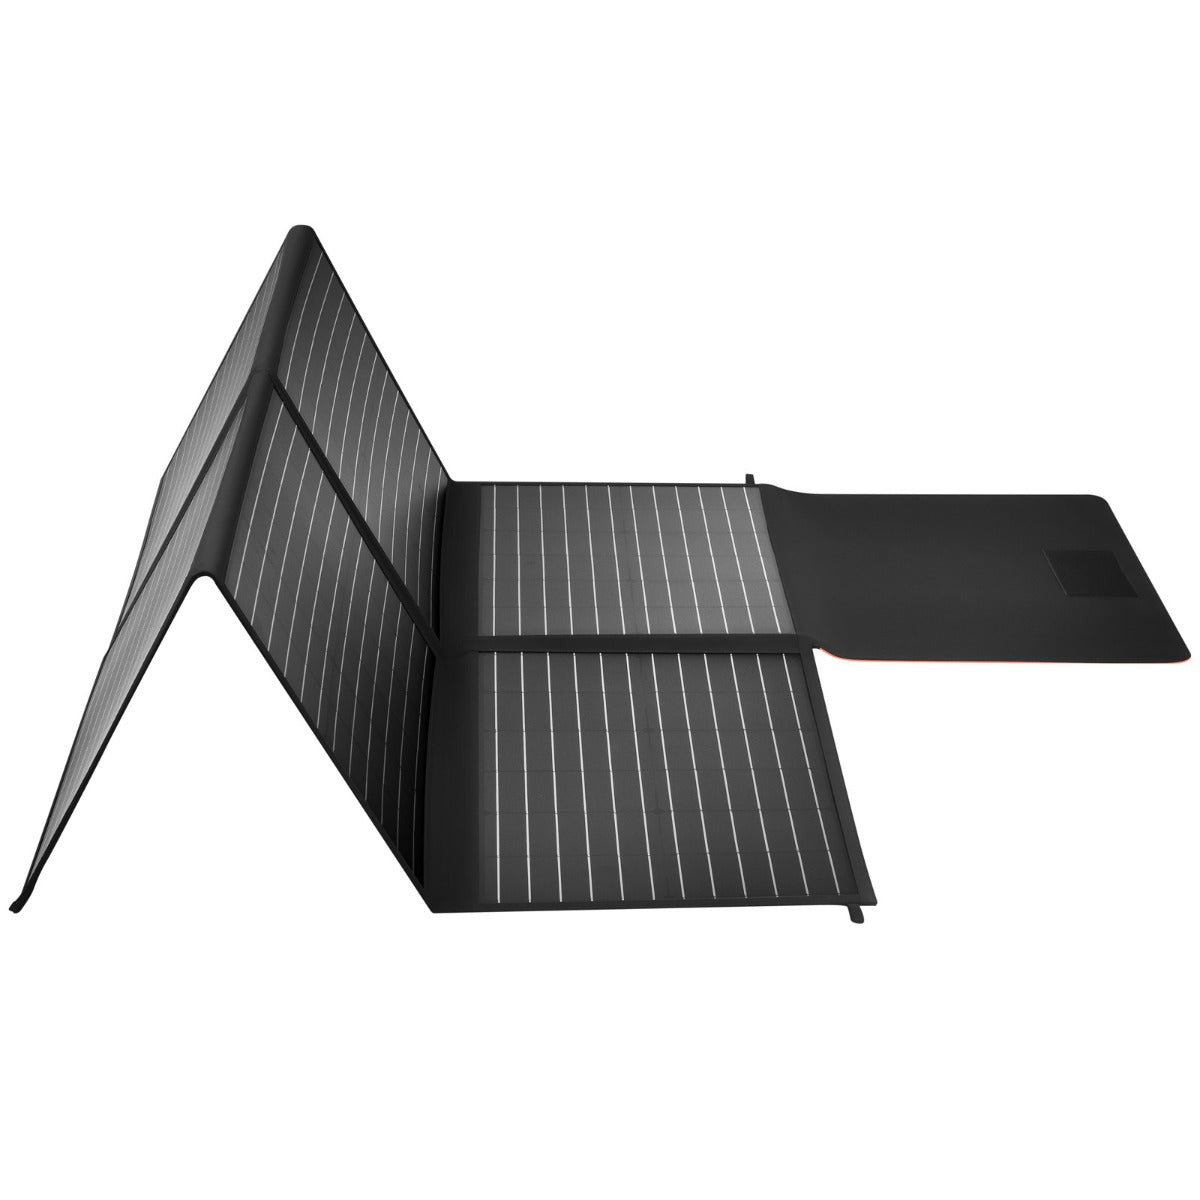 VoltX 12V 200W Mono Solar Blanket Folding Solar Panel Kit Portable Camping